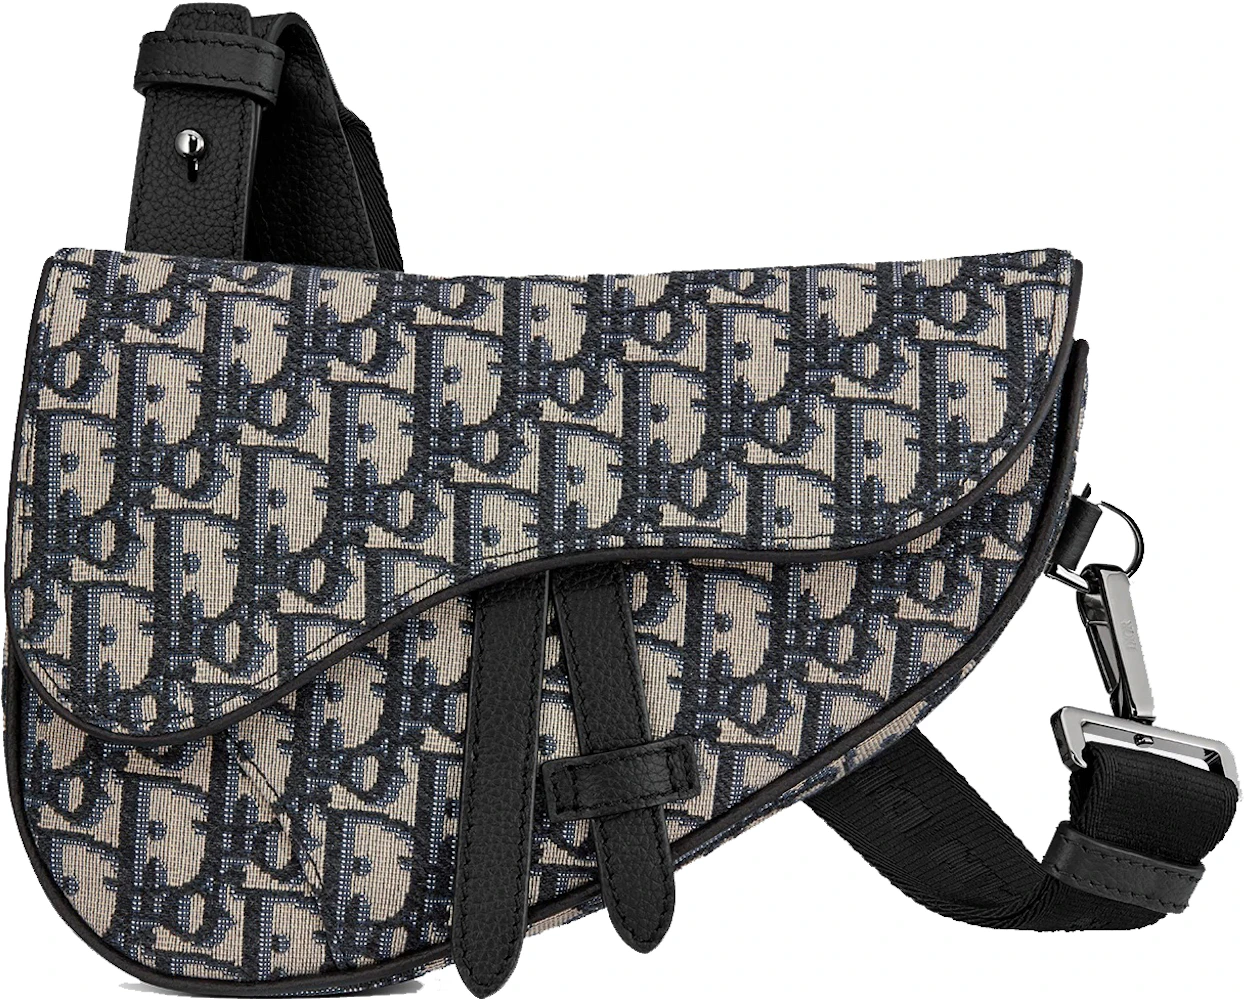 Dior - Mini Saddle Bag with Strap Beige and Black Dior Oblique Jacquard and Black Grained Calfskin - Men